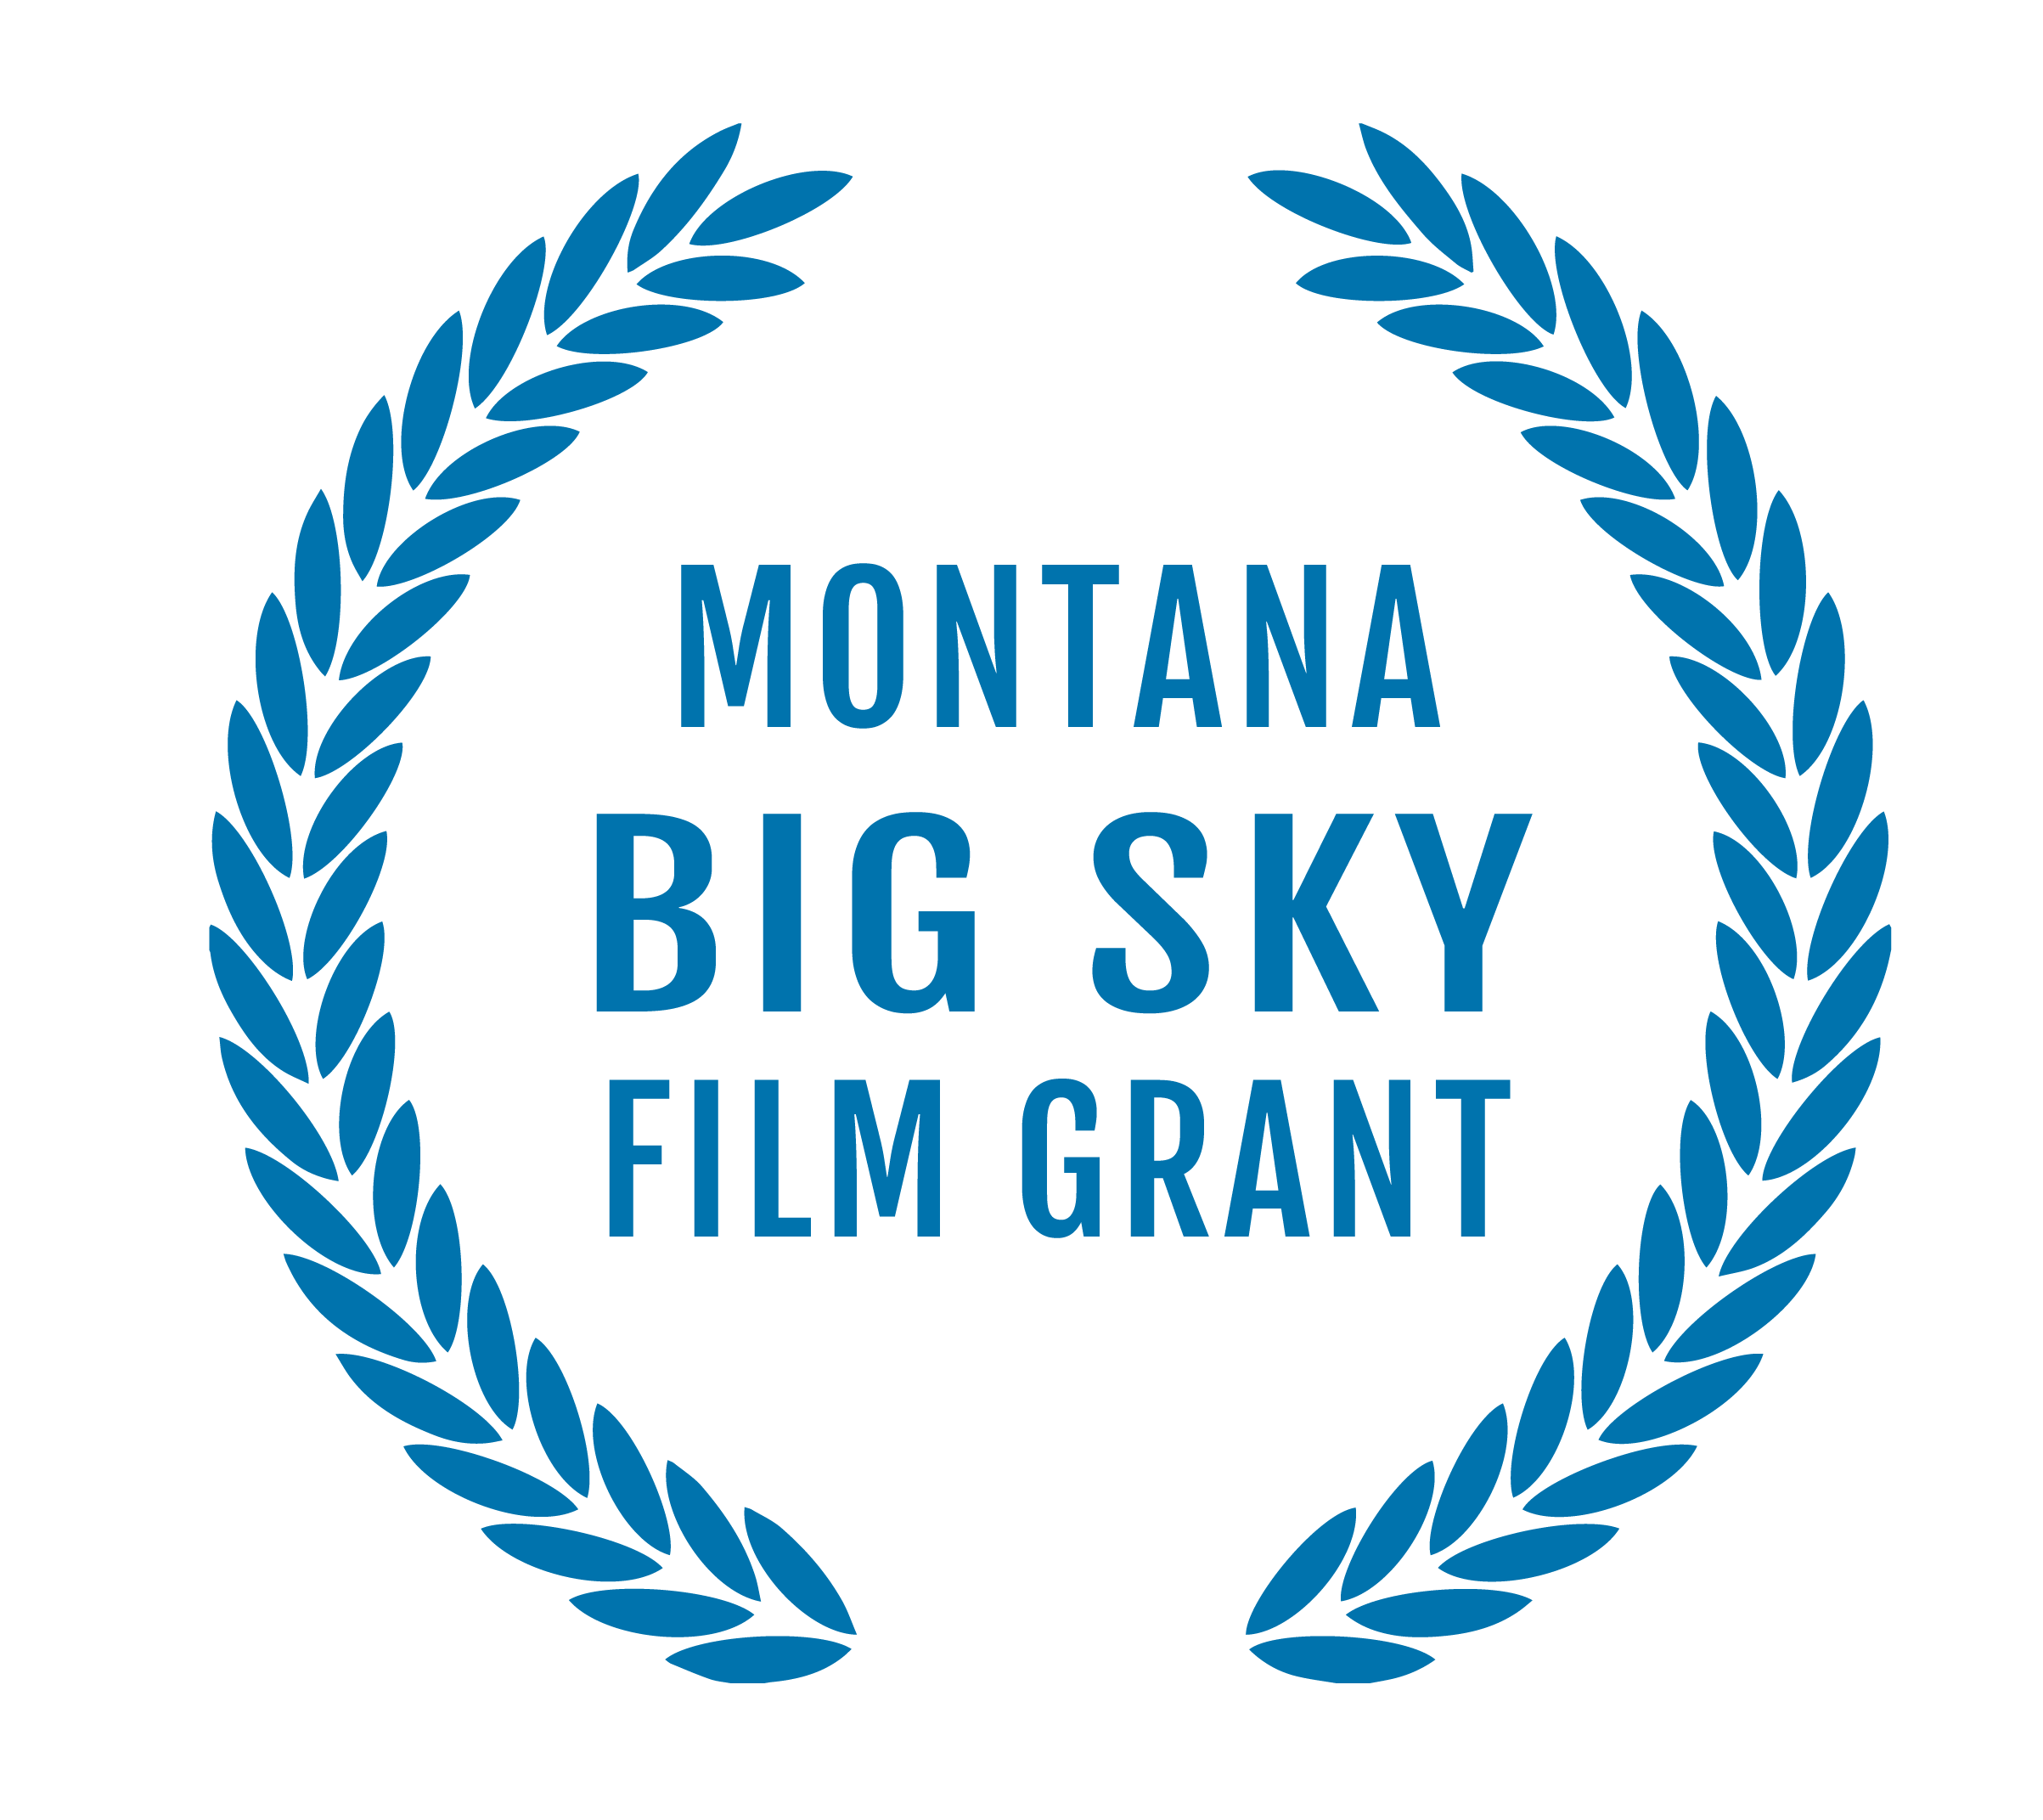 BIG SKY FILM GRANT